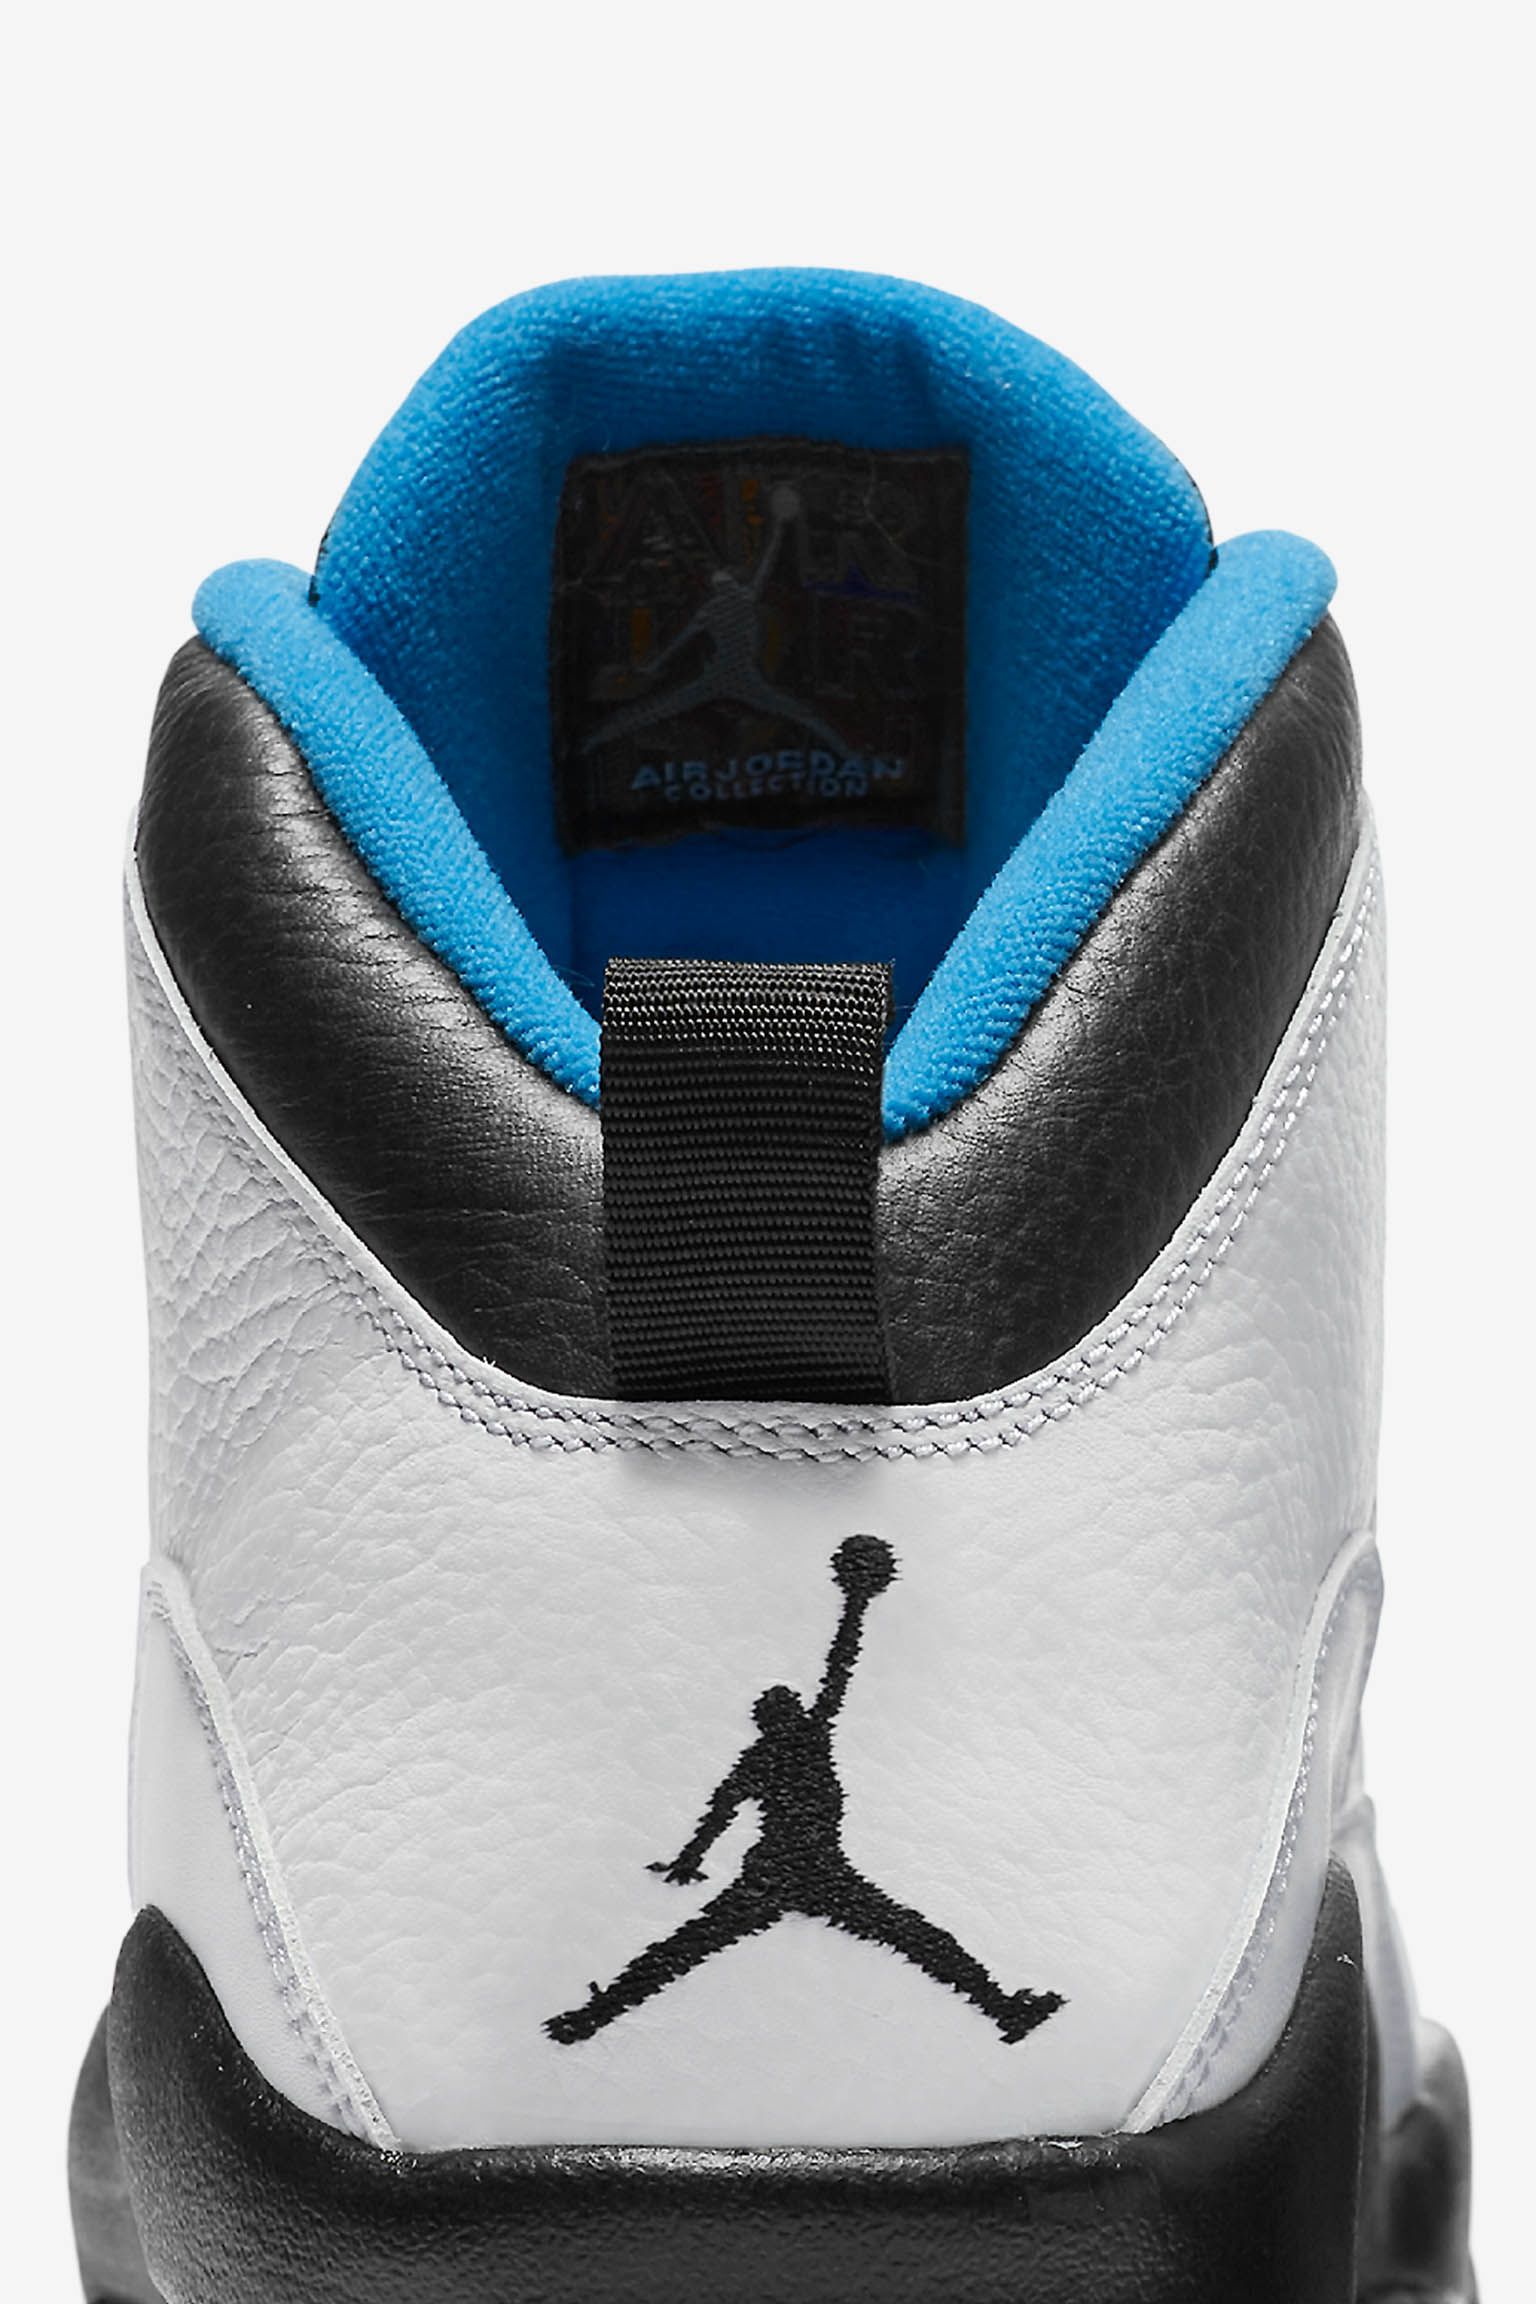 Air Jordan 10 Retro "Powder de Nike SNKRS